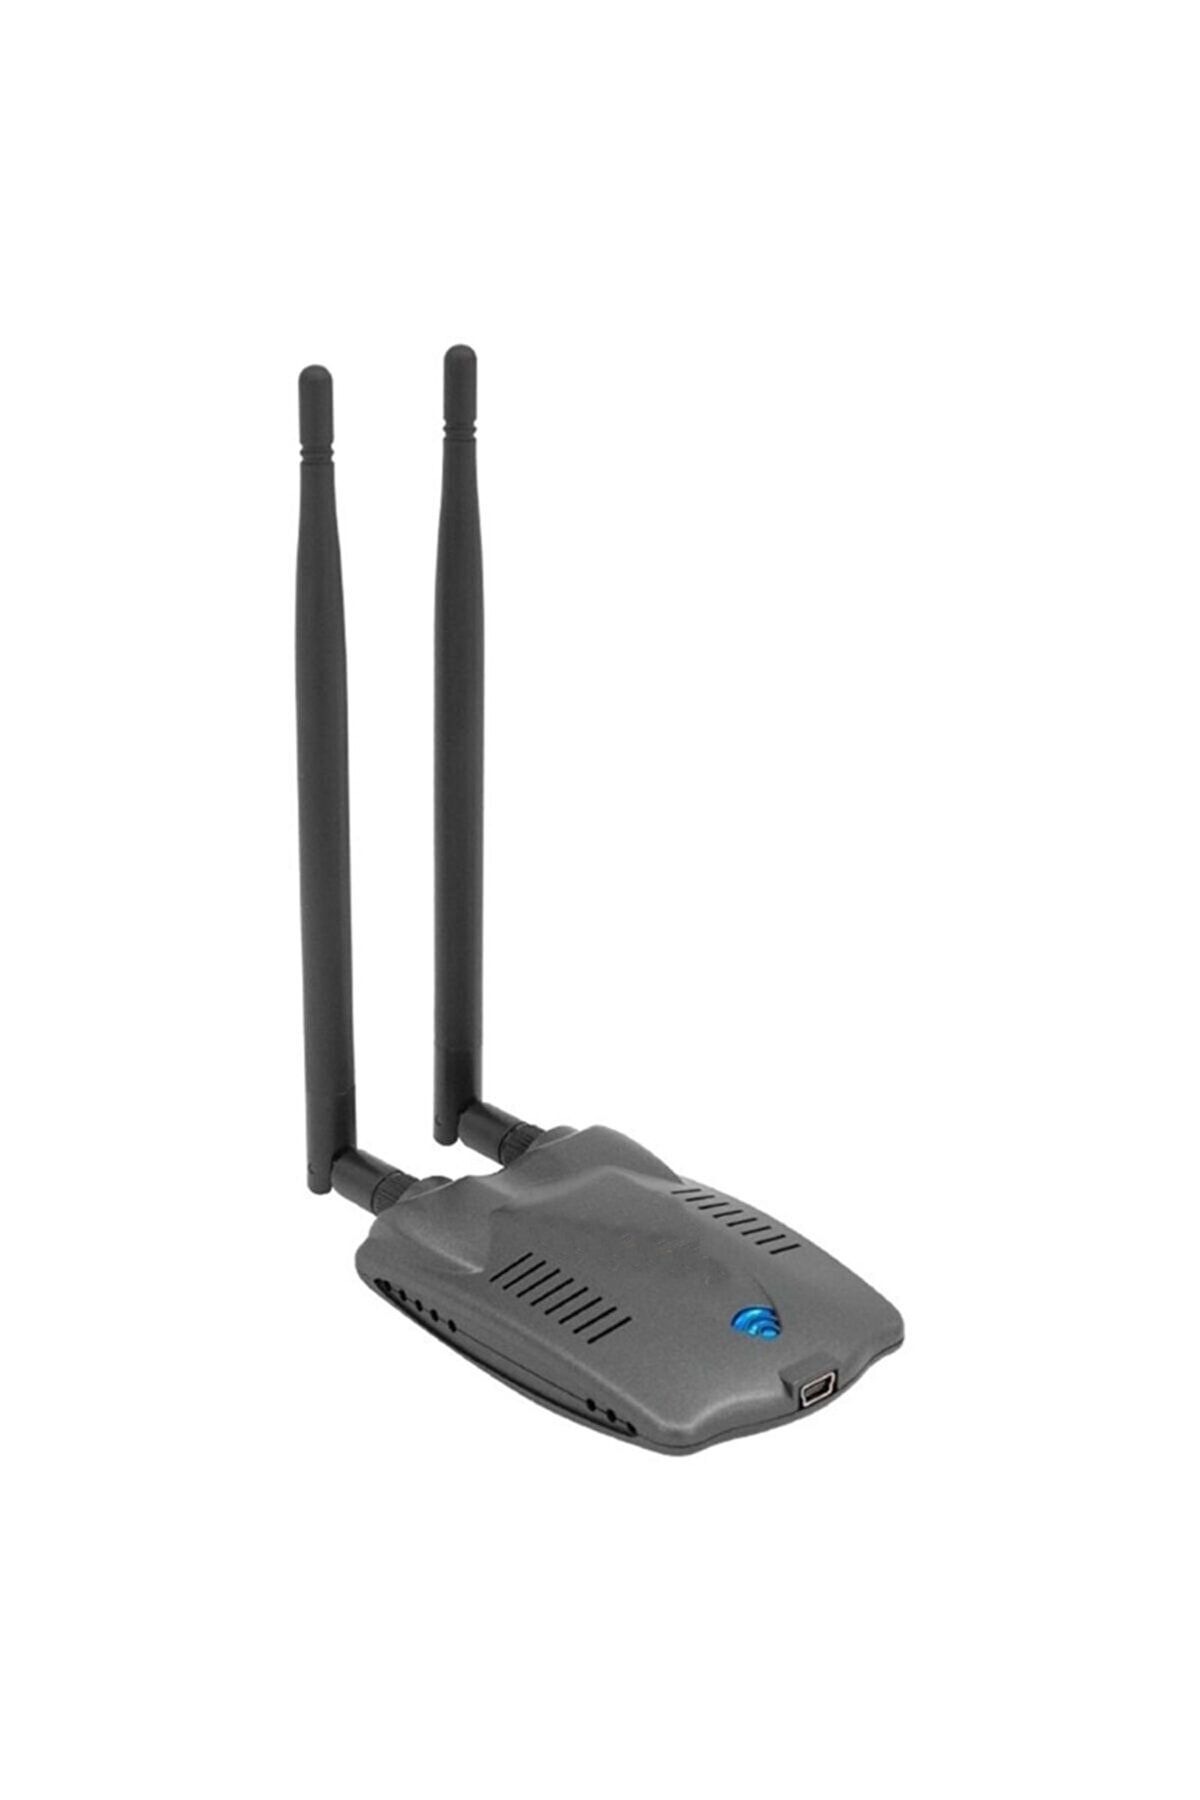 gaman 2 Antenli 300mbps Access Point Wifi Repeater Kablosuz Sinyal Ve Internet Güçlendirici